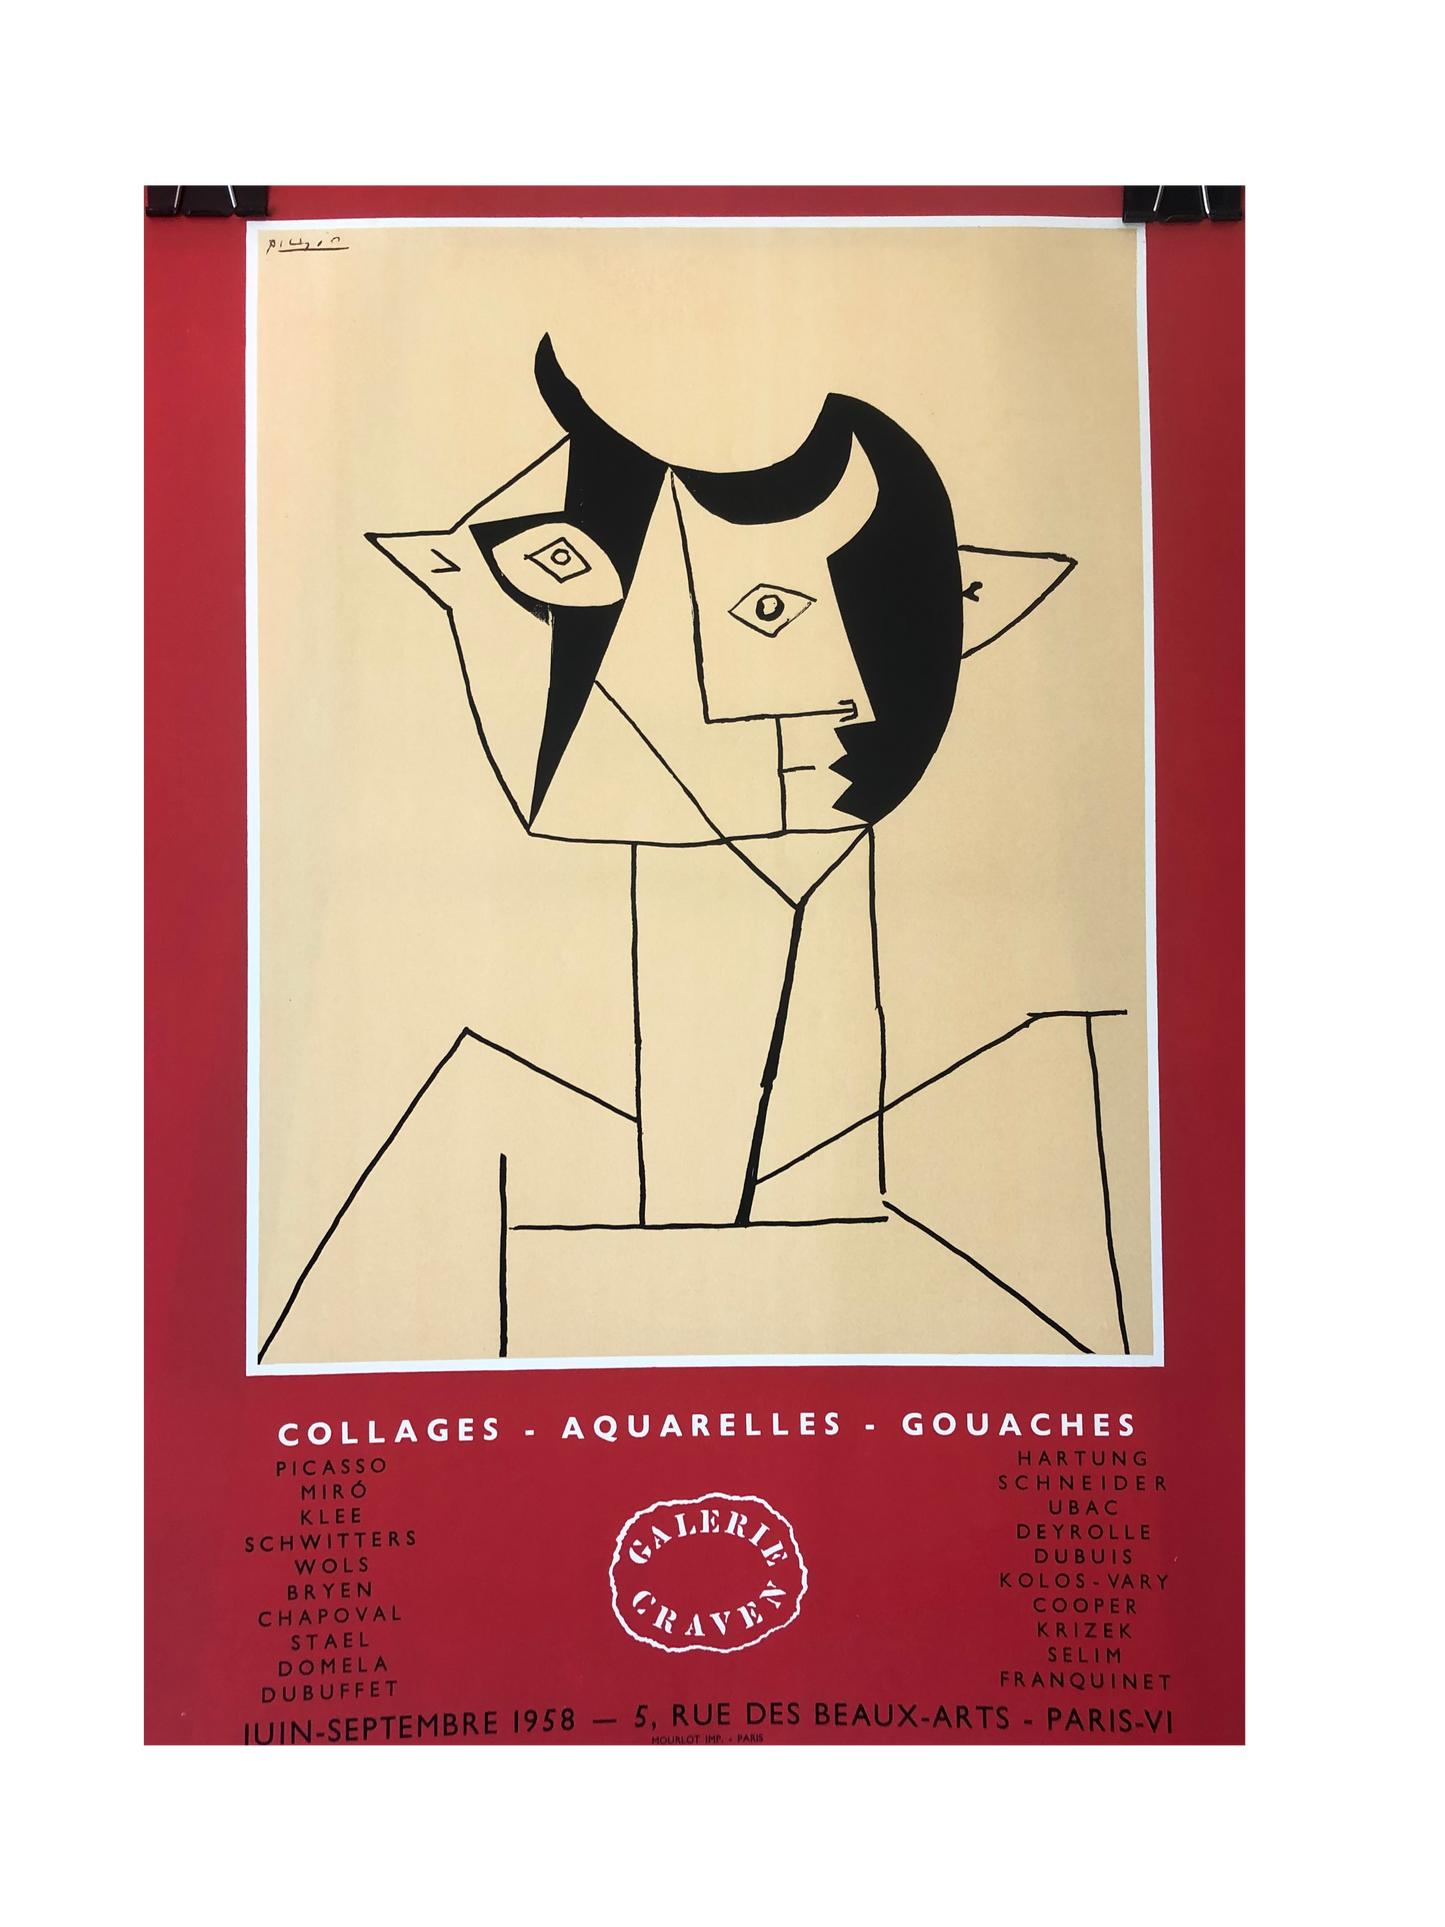 Picasso Exhibition Poster, Galerie Craven